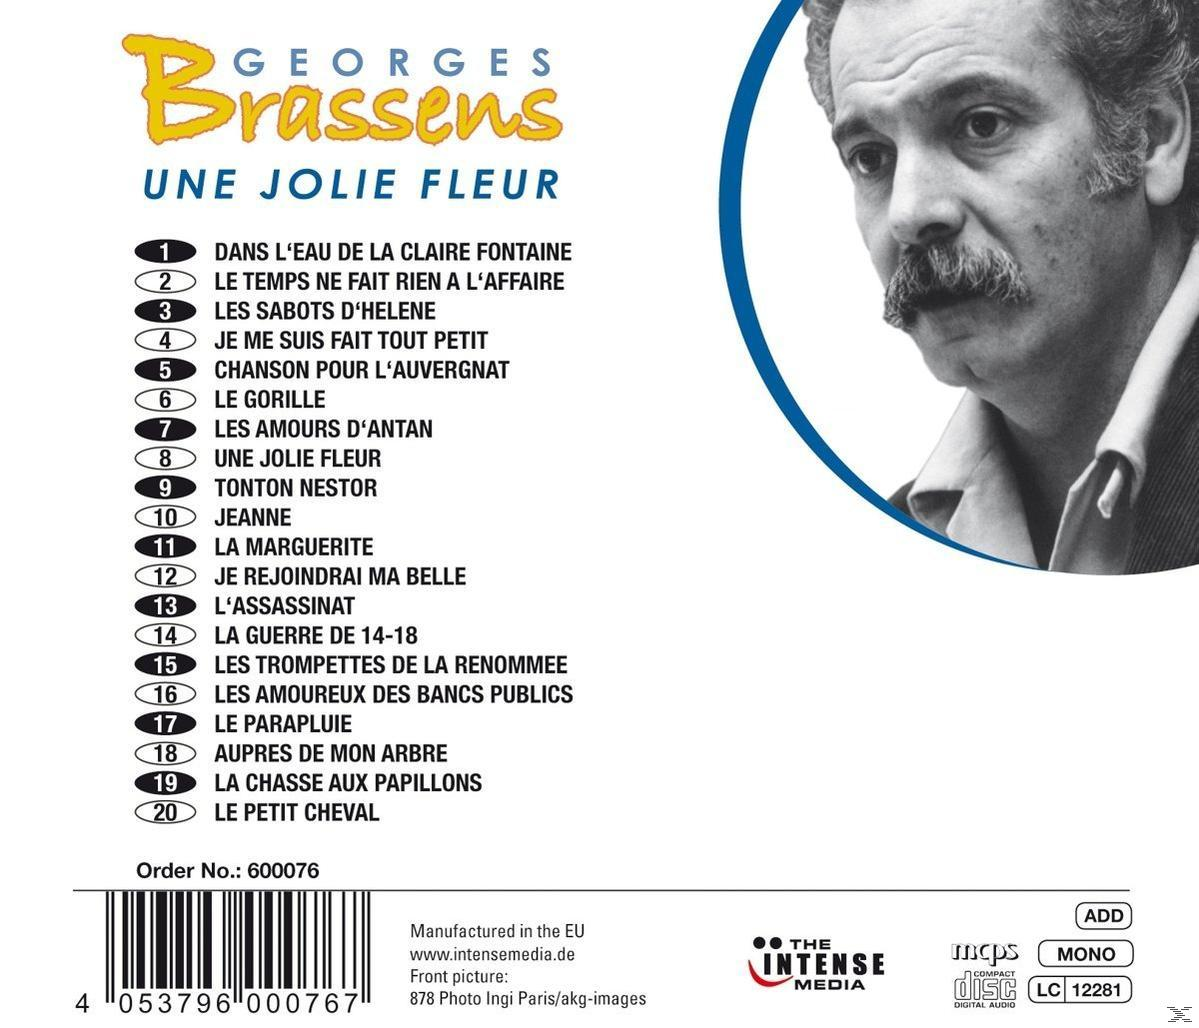 Georges (CD) Jolie Brassens - Fleur - Une